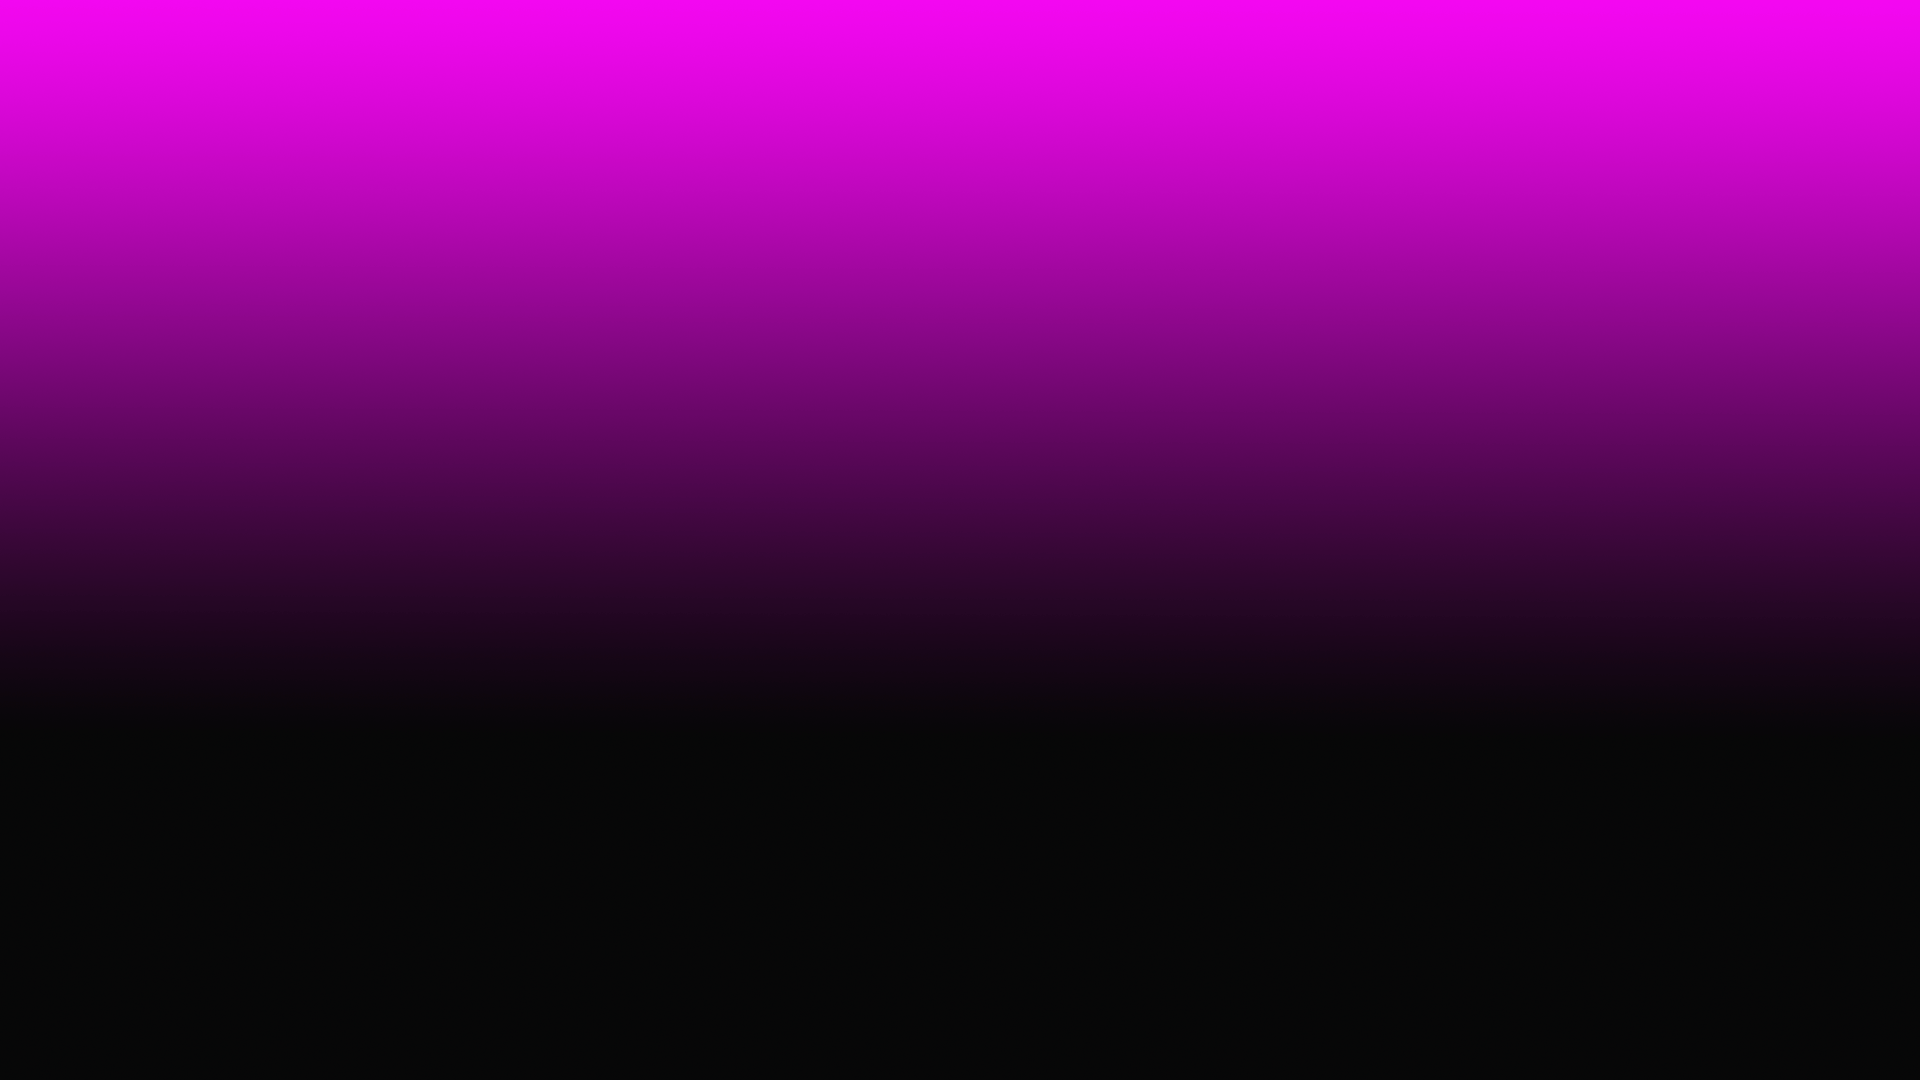 Download Black To Pink Gradient wallpaper 865927 [1920x1080]